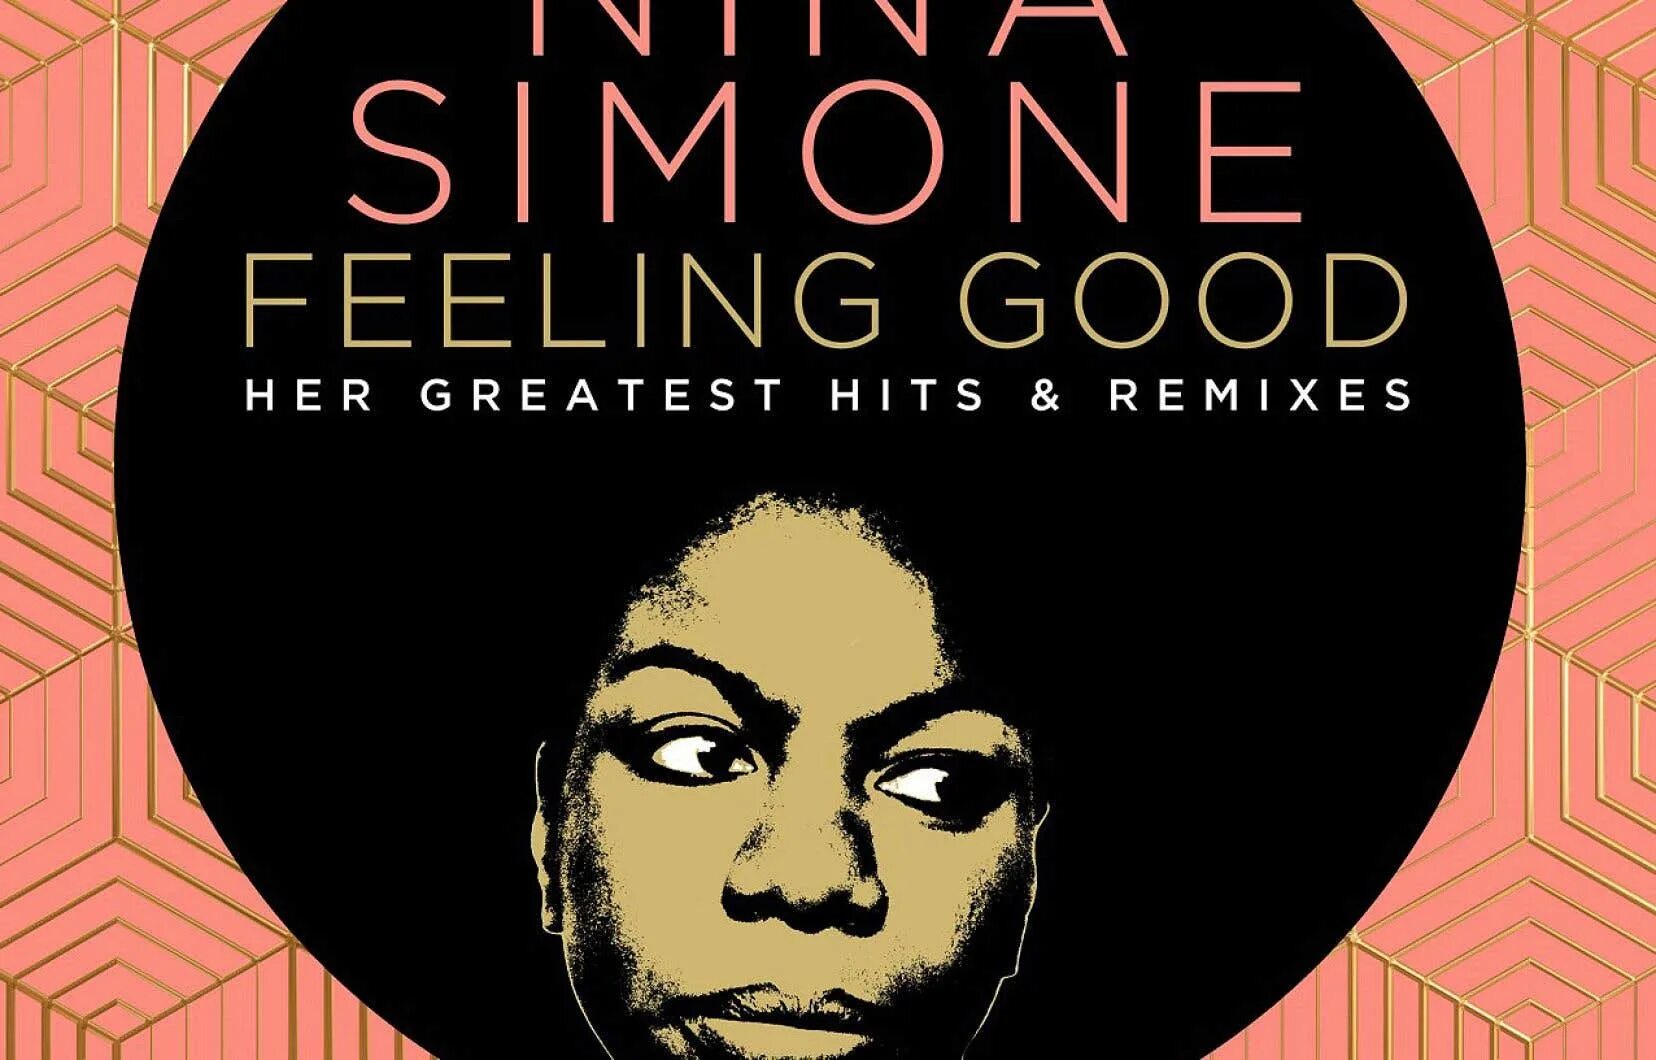 My feeling good. Nina Simone album. Nina Simone feeling good. Nina Simone 2022.